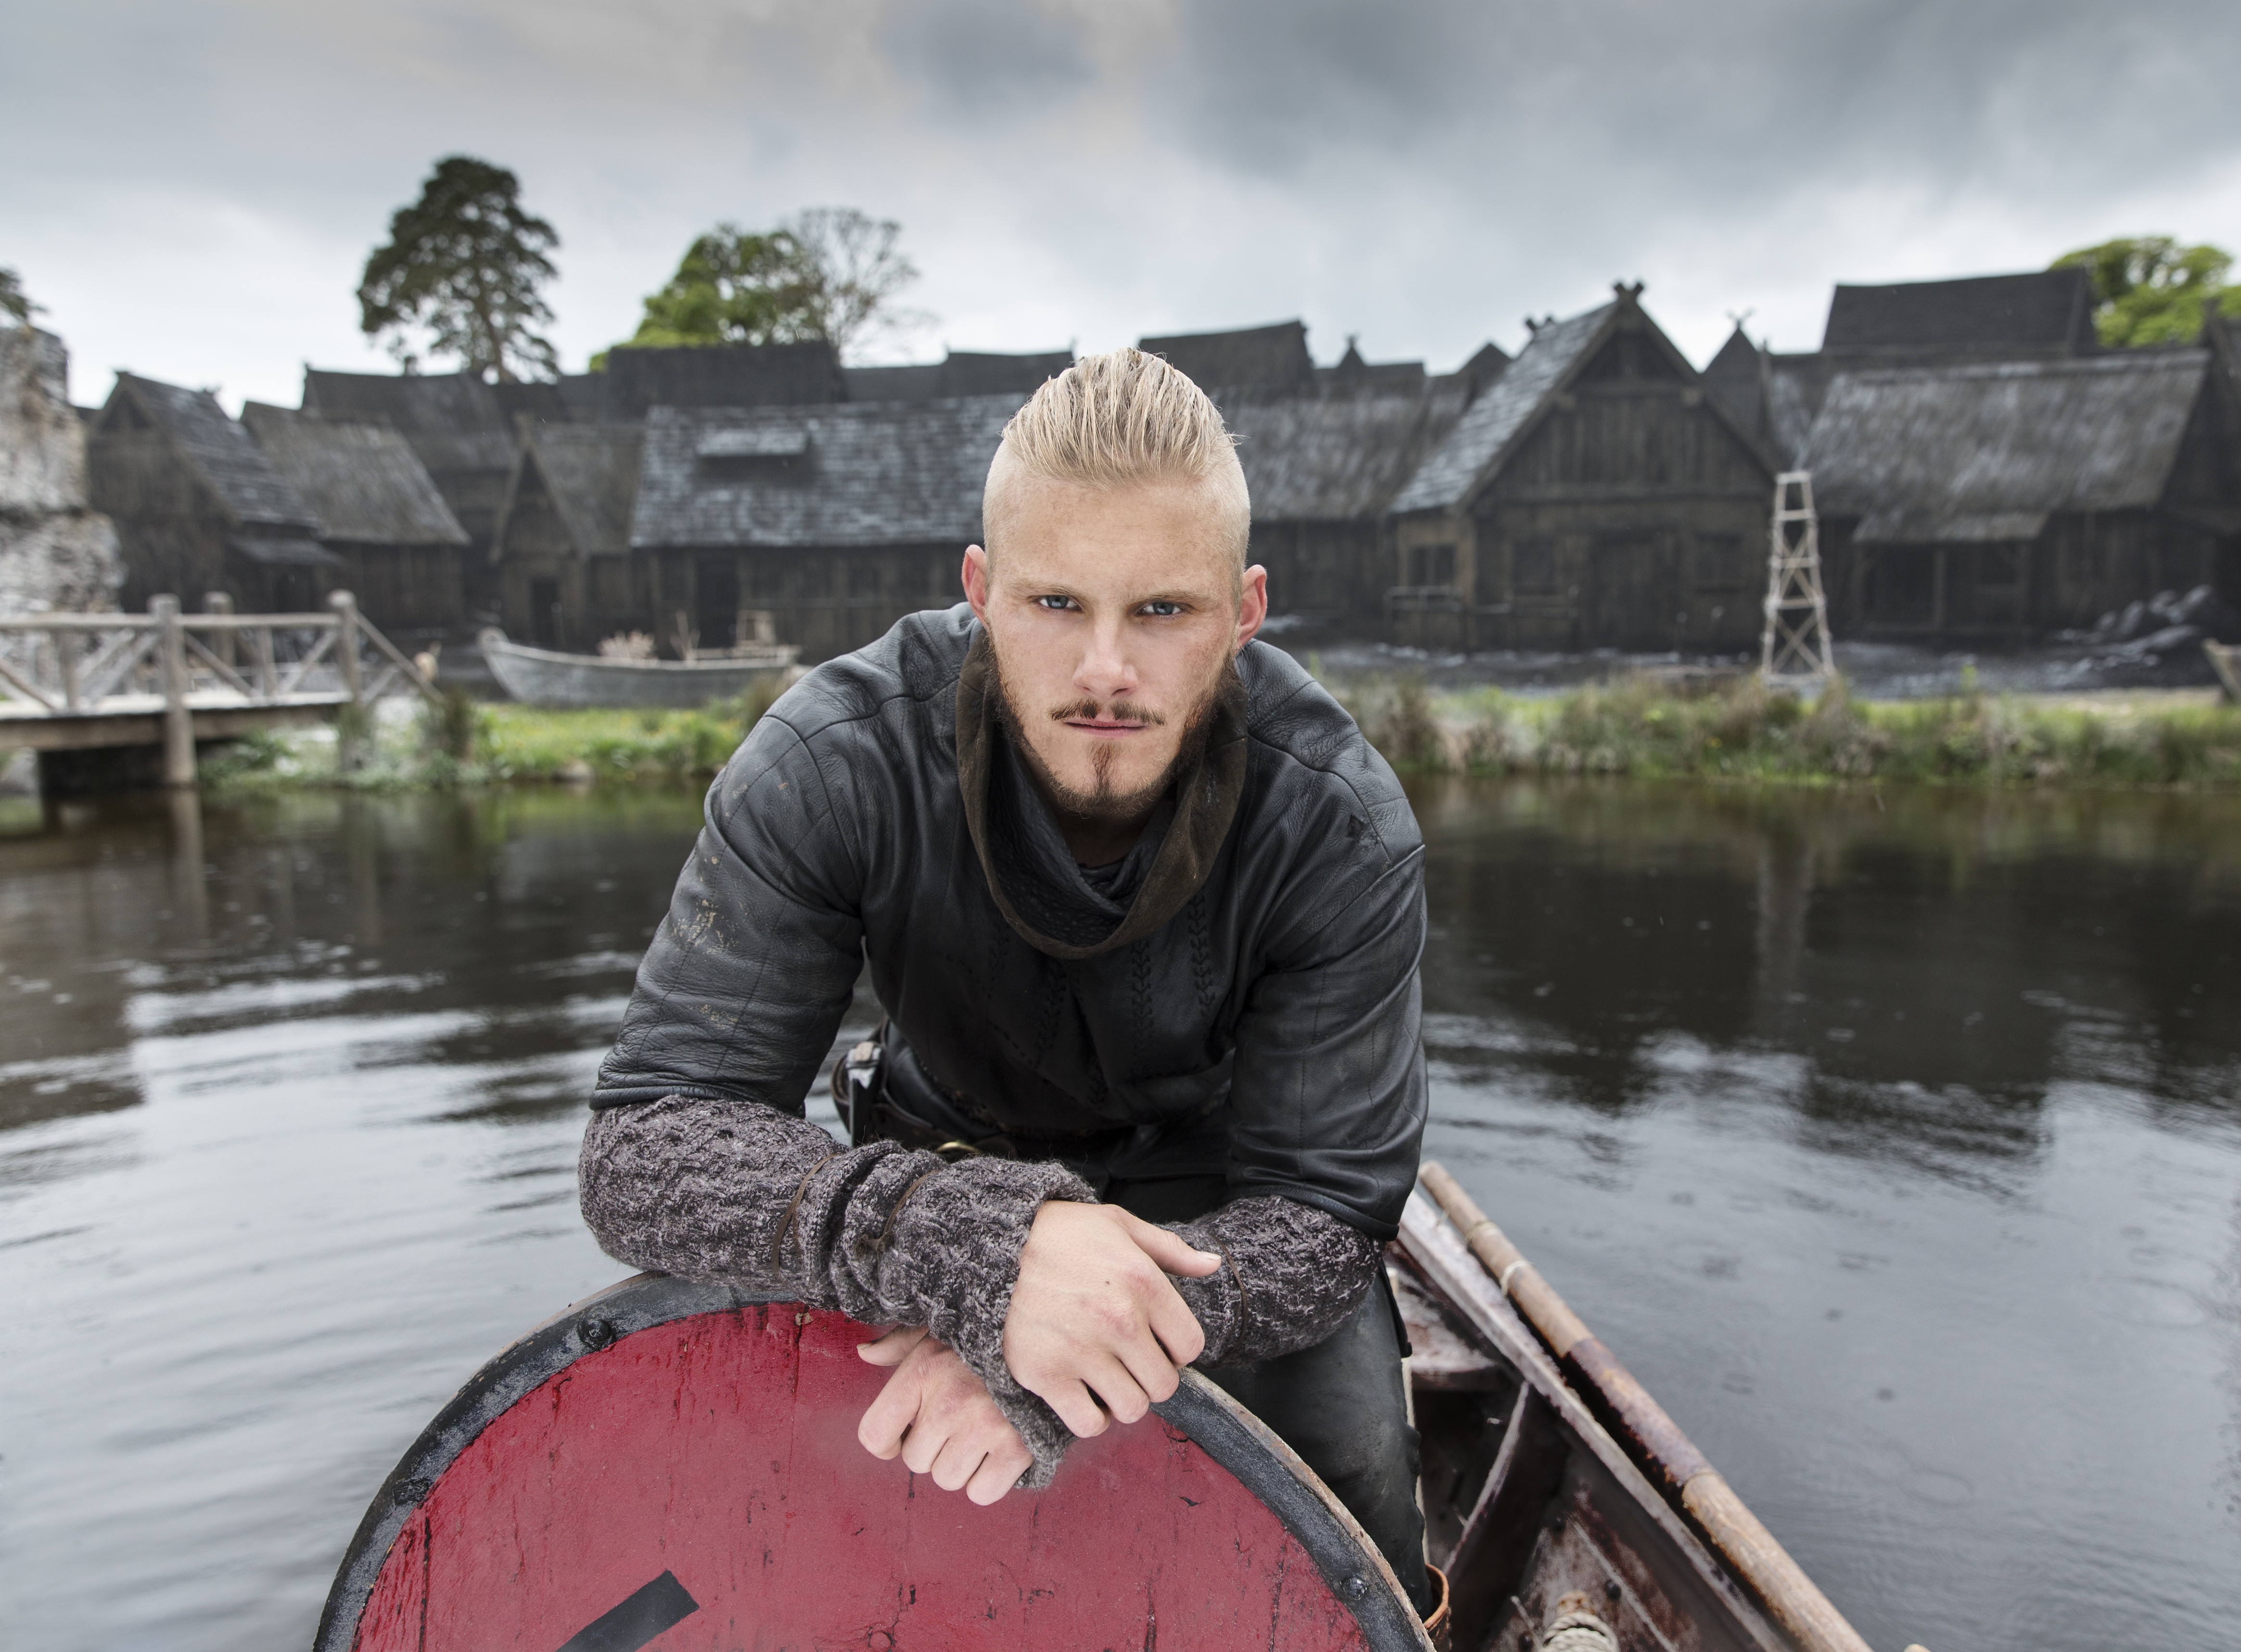 Bjorn Ironside, Ragnar Lothbrok's Son - Mythologian